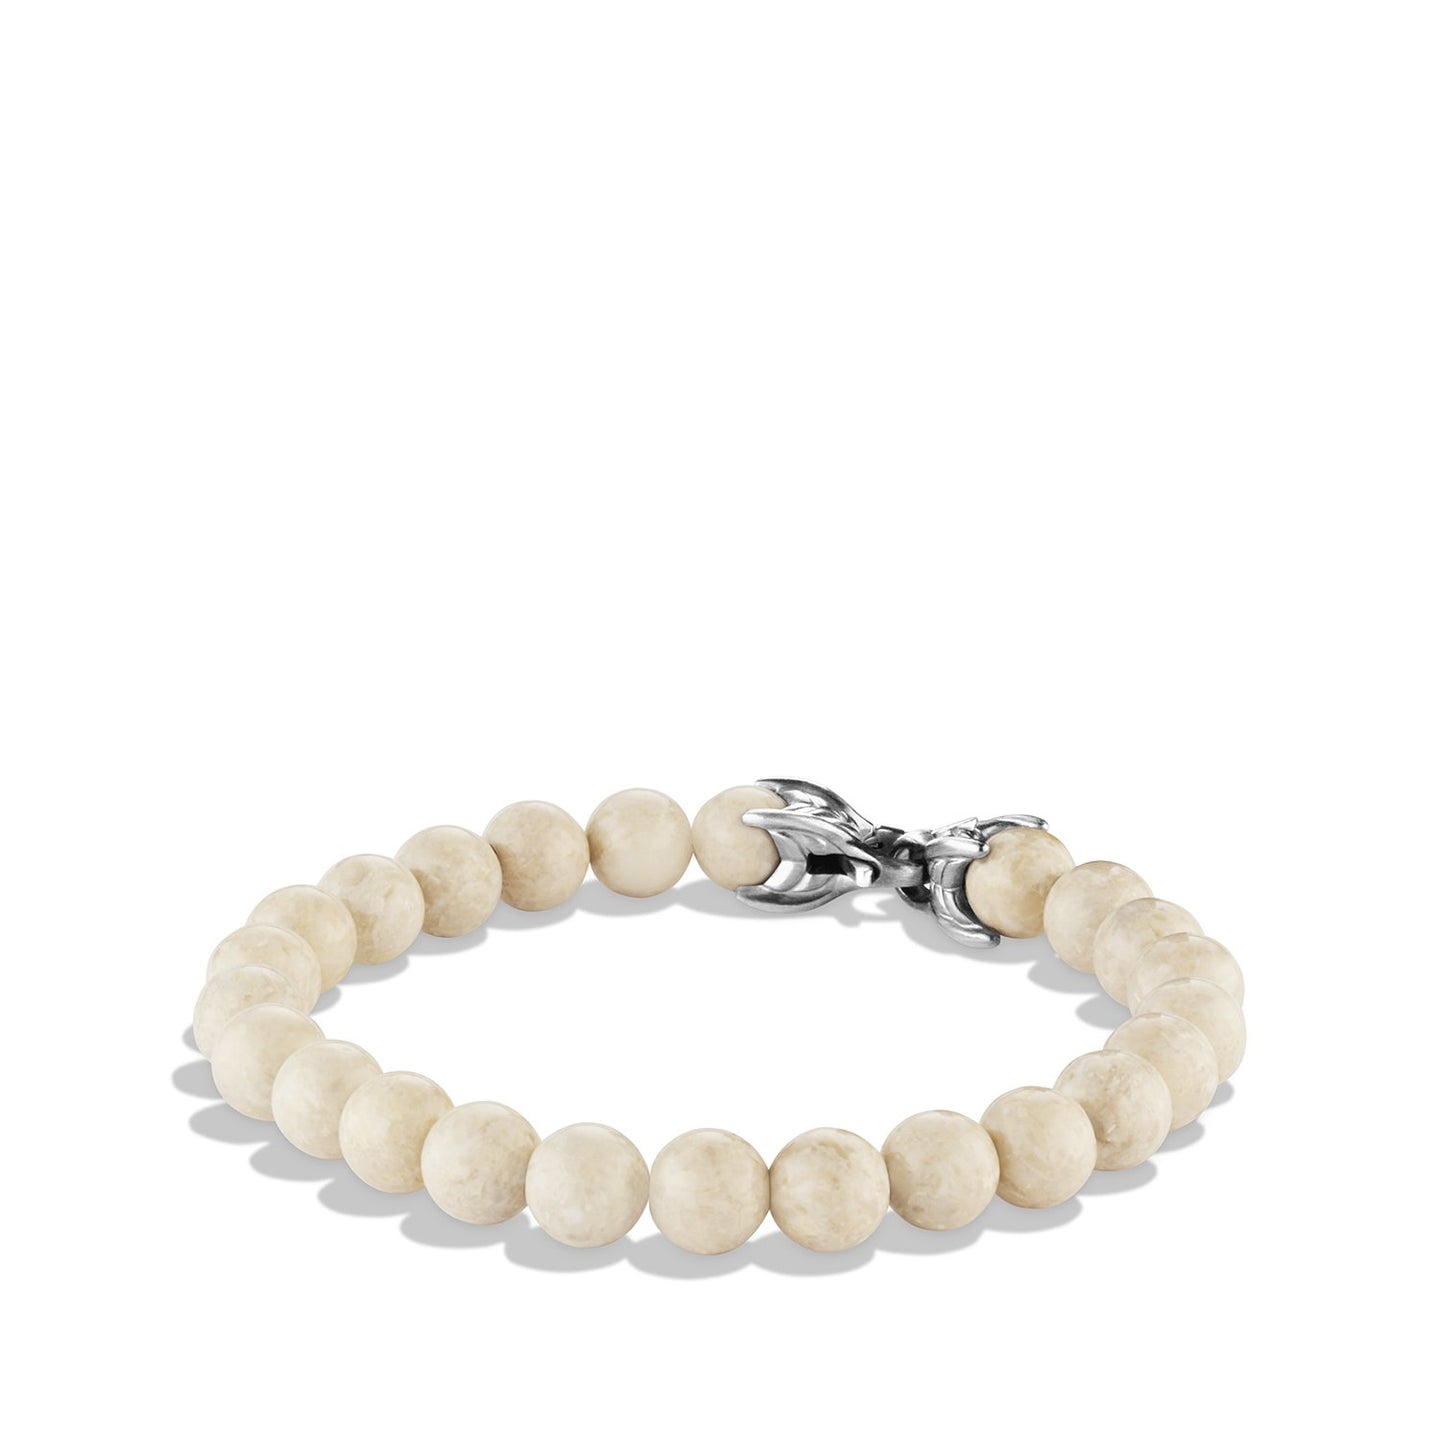 Spiritual Beads Bracelet with River Stone